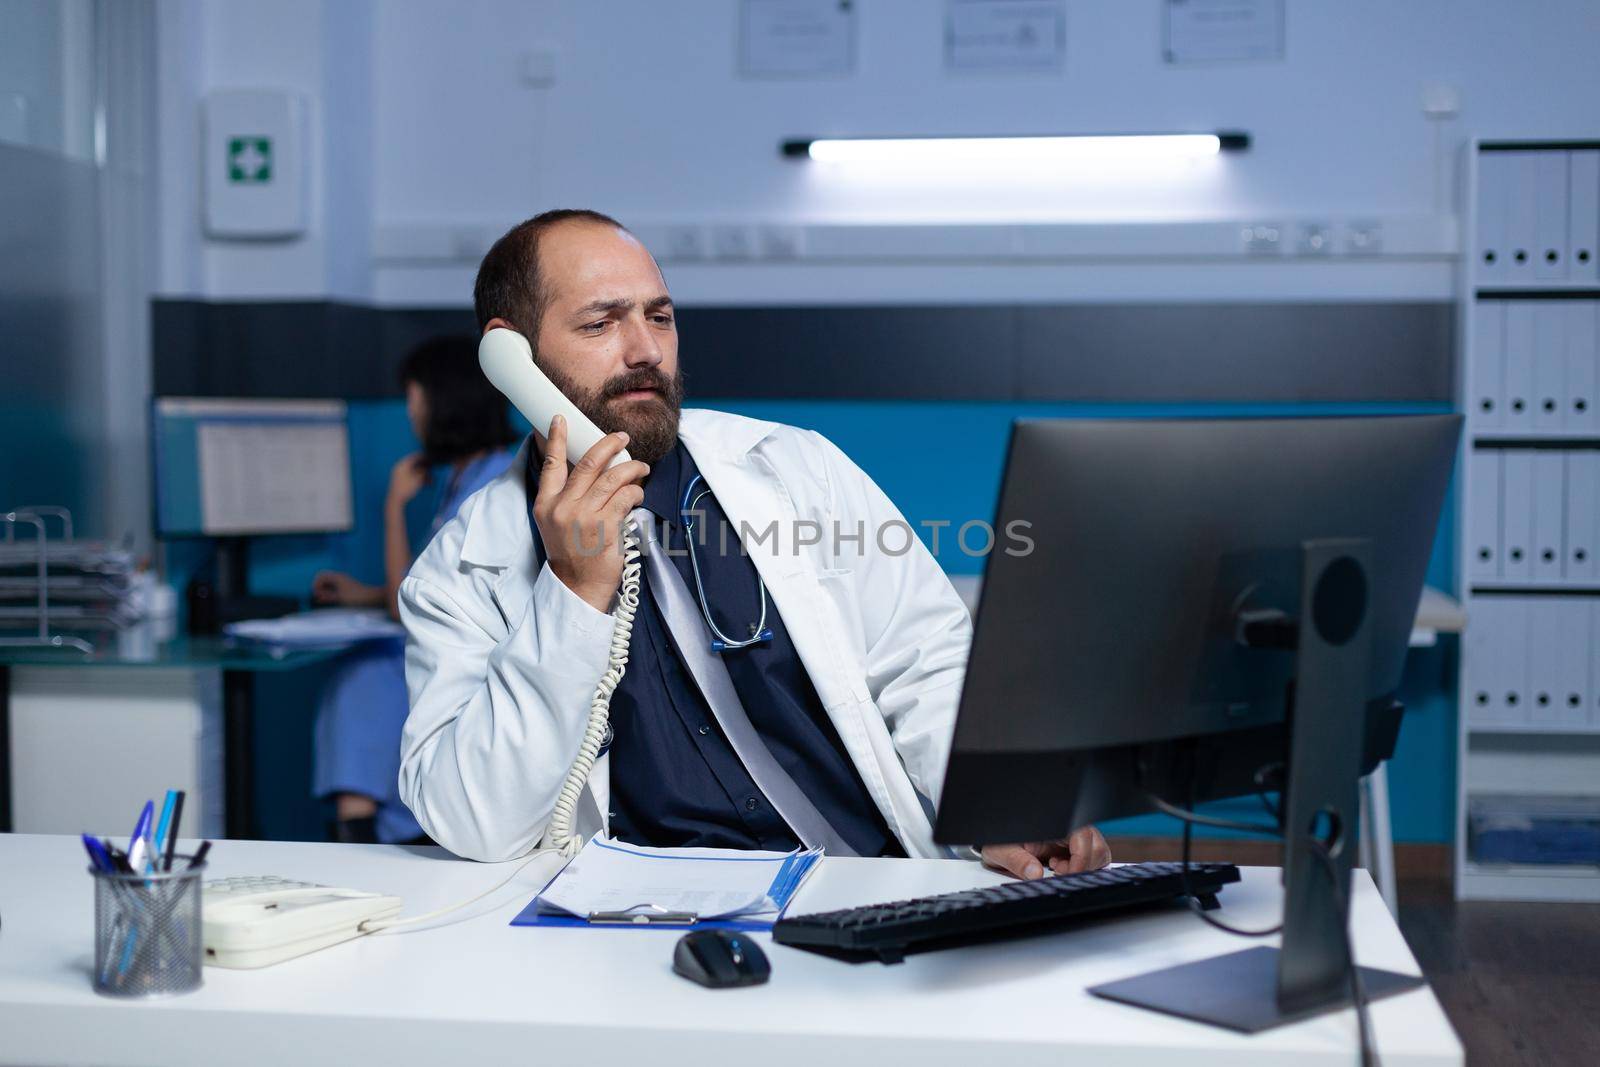 Medic using landline phone for remote communication overtime by DCStudio